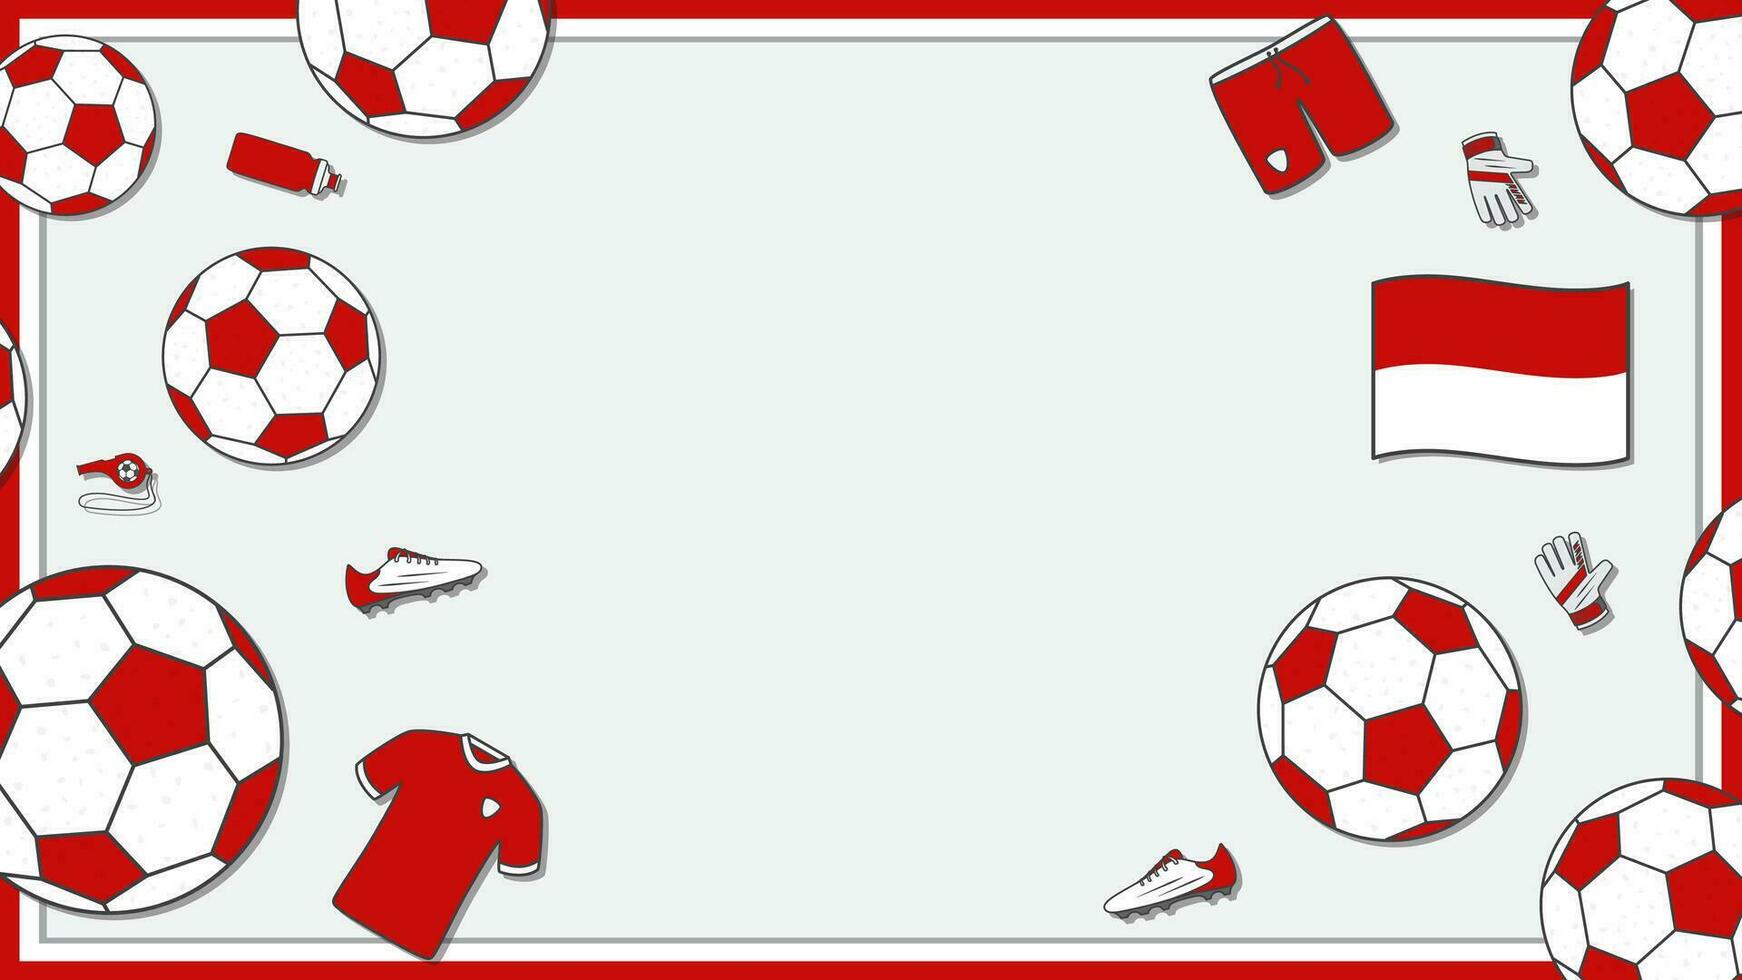 Football Background Design Template. Football Cartoon Vector Illustration. Sport In Indonesia